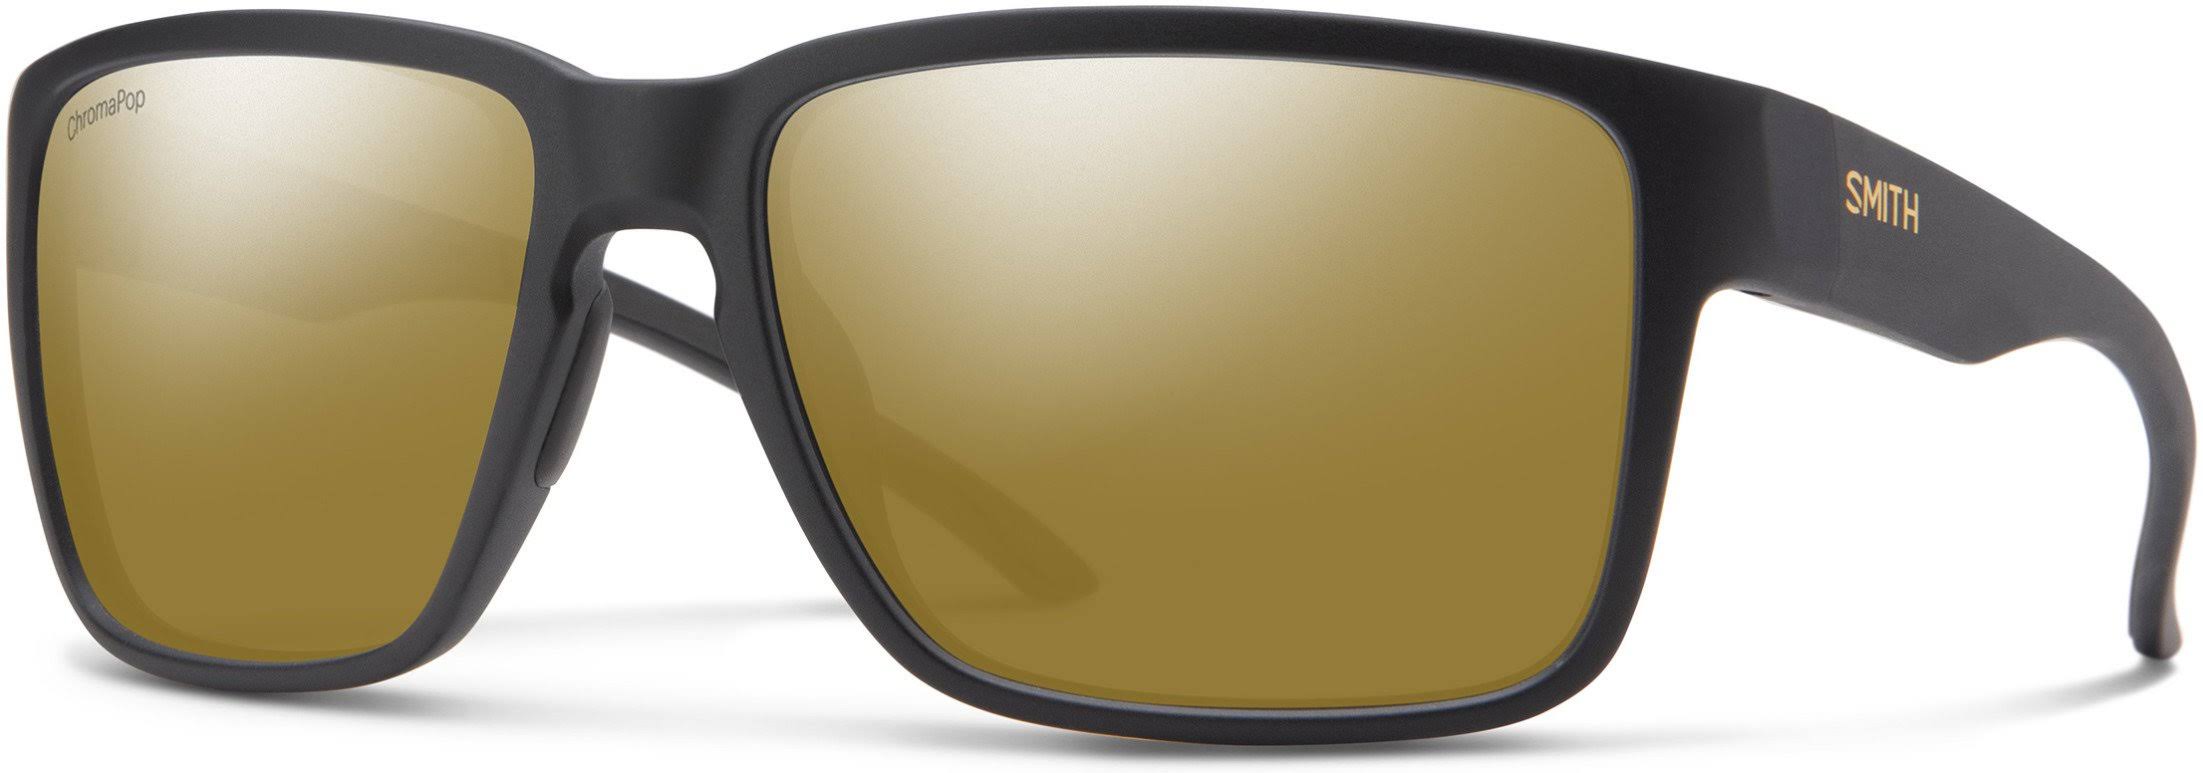 Smith emerge sunglasses (matte Black - polarized bronze)